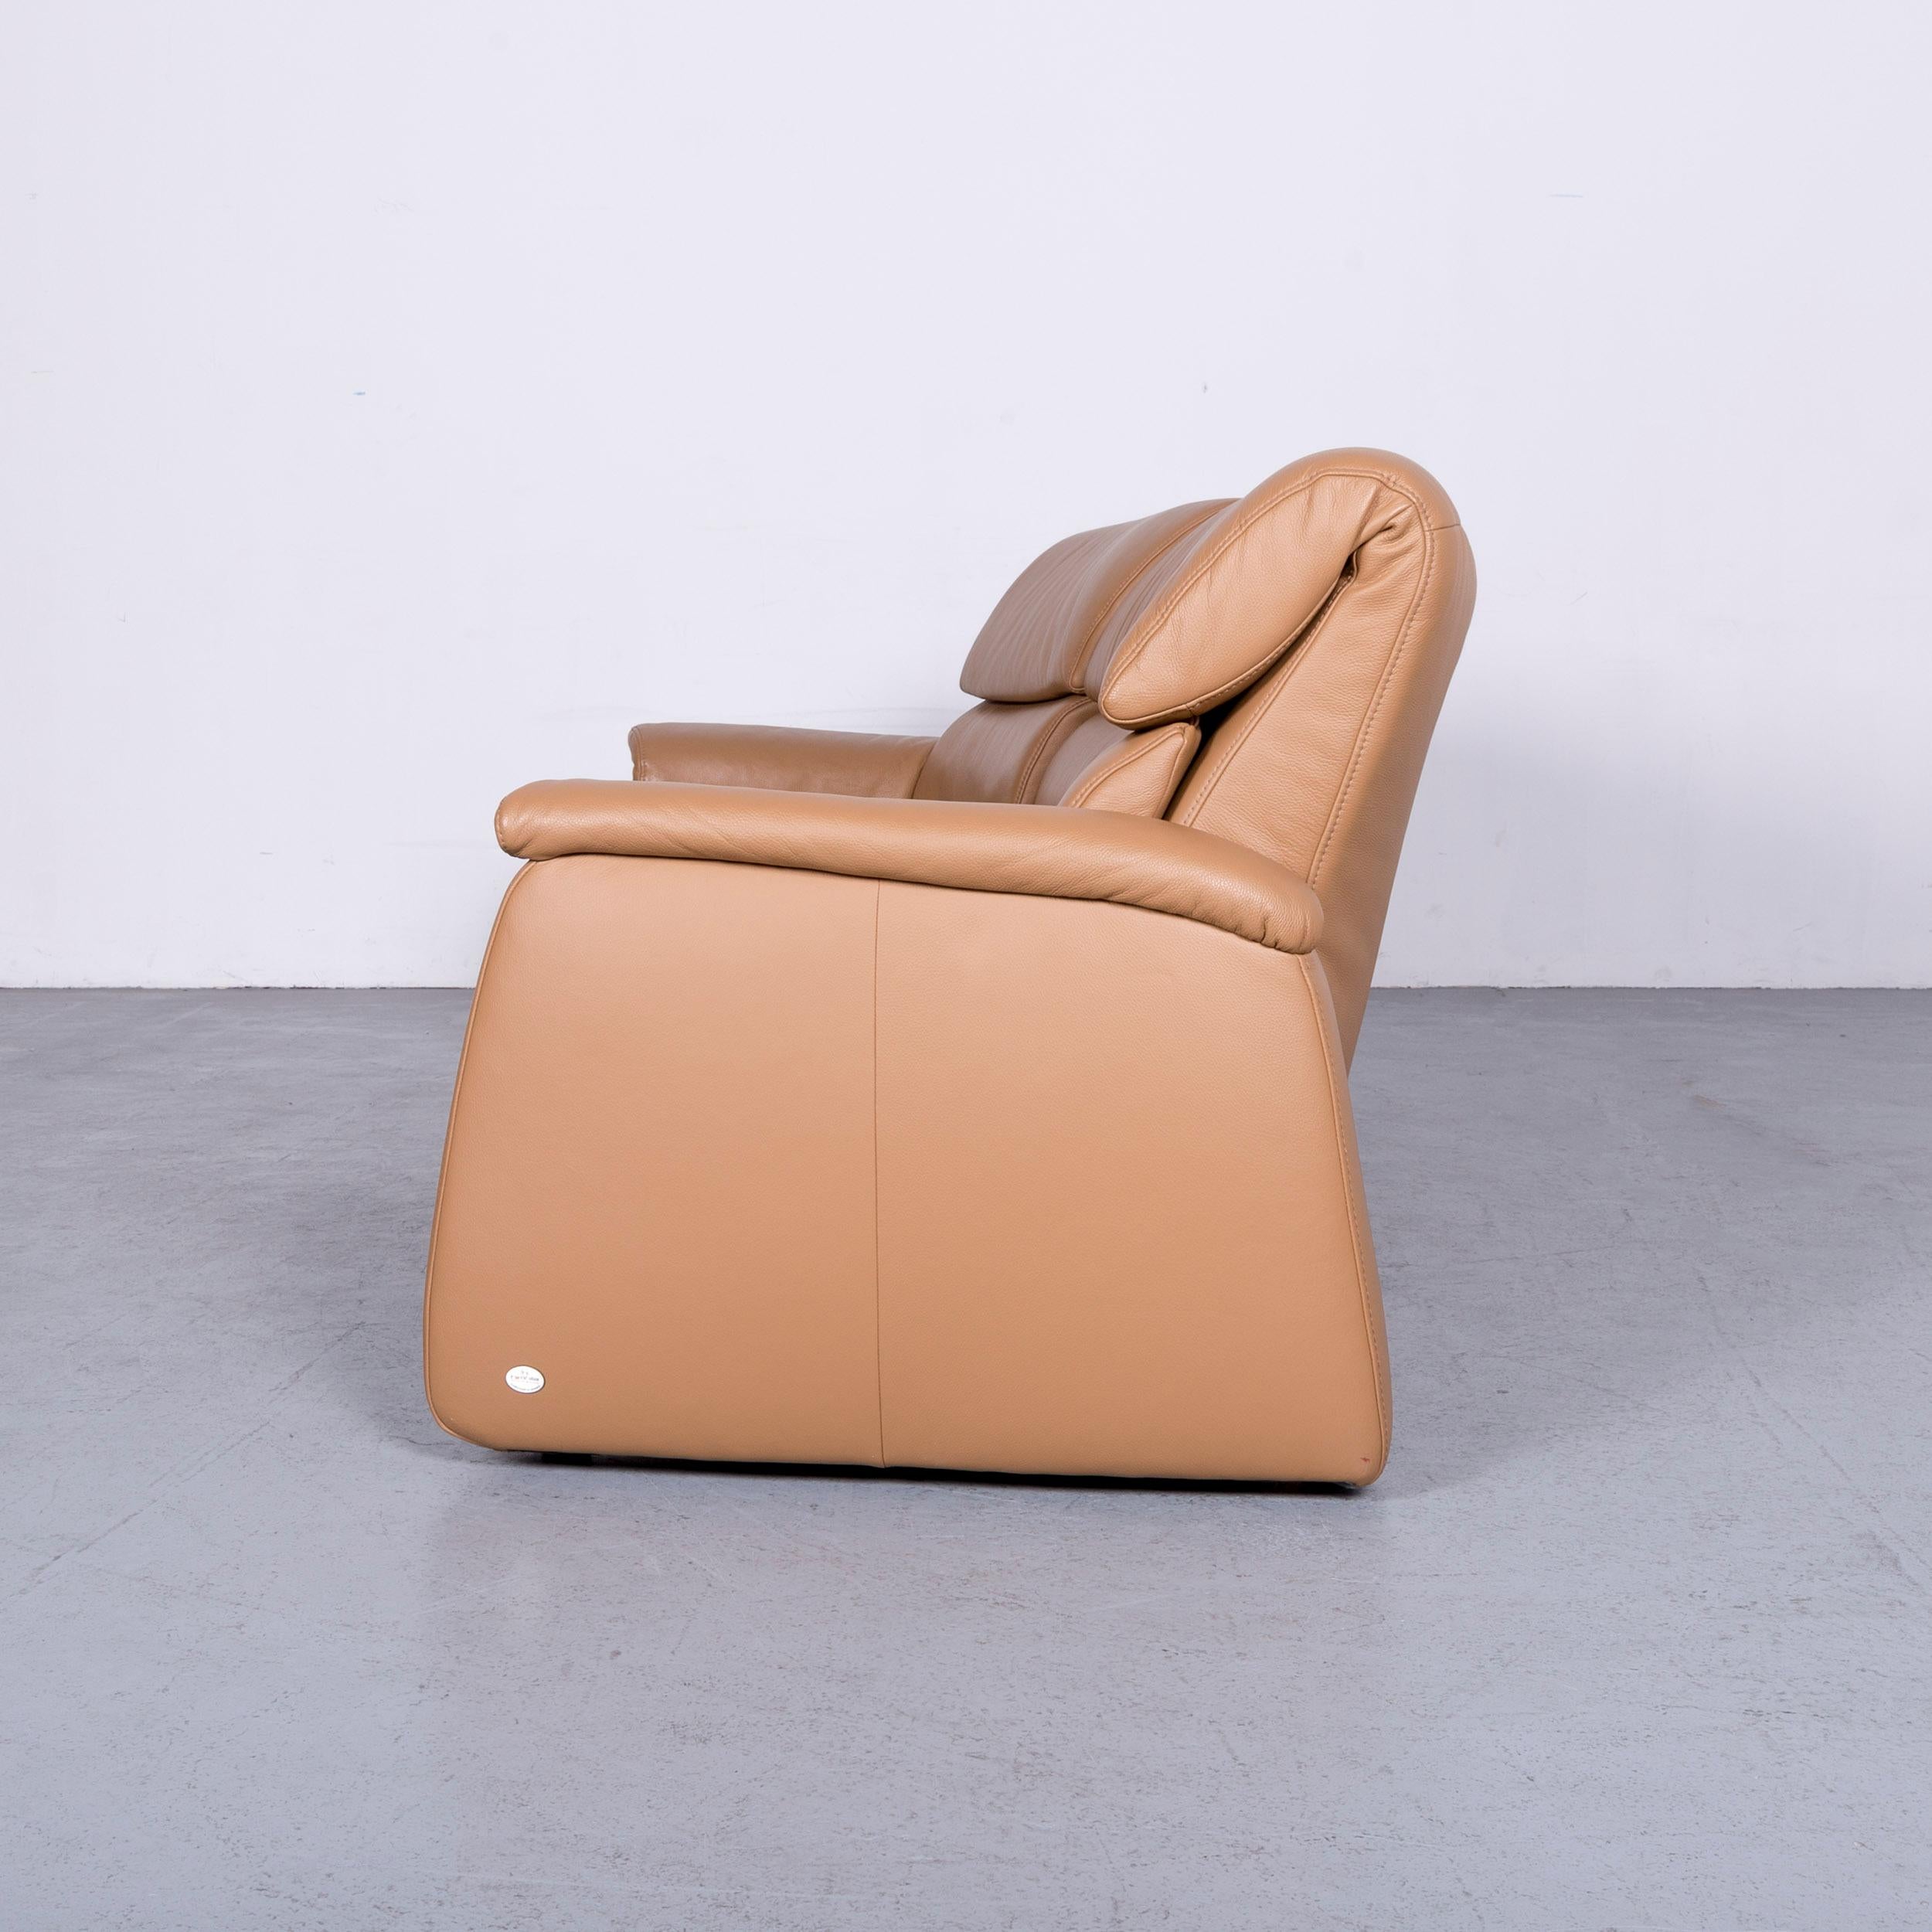 Himolla Designer Sofa Beige Three-Seat Couch Recliner Function 8